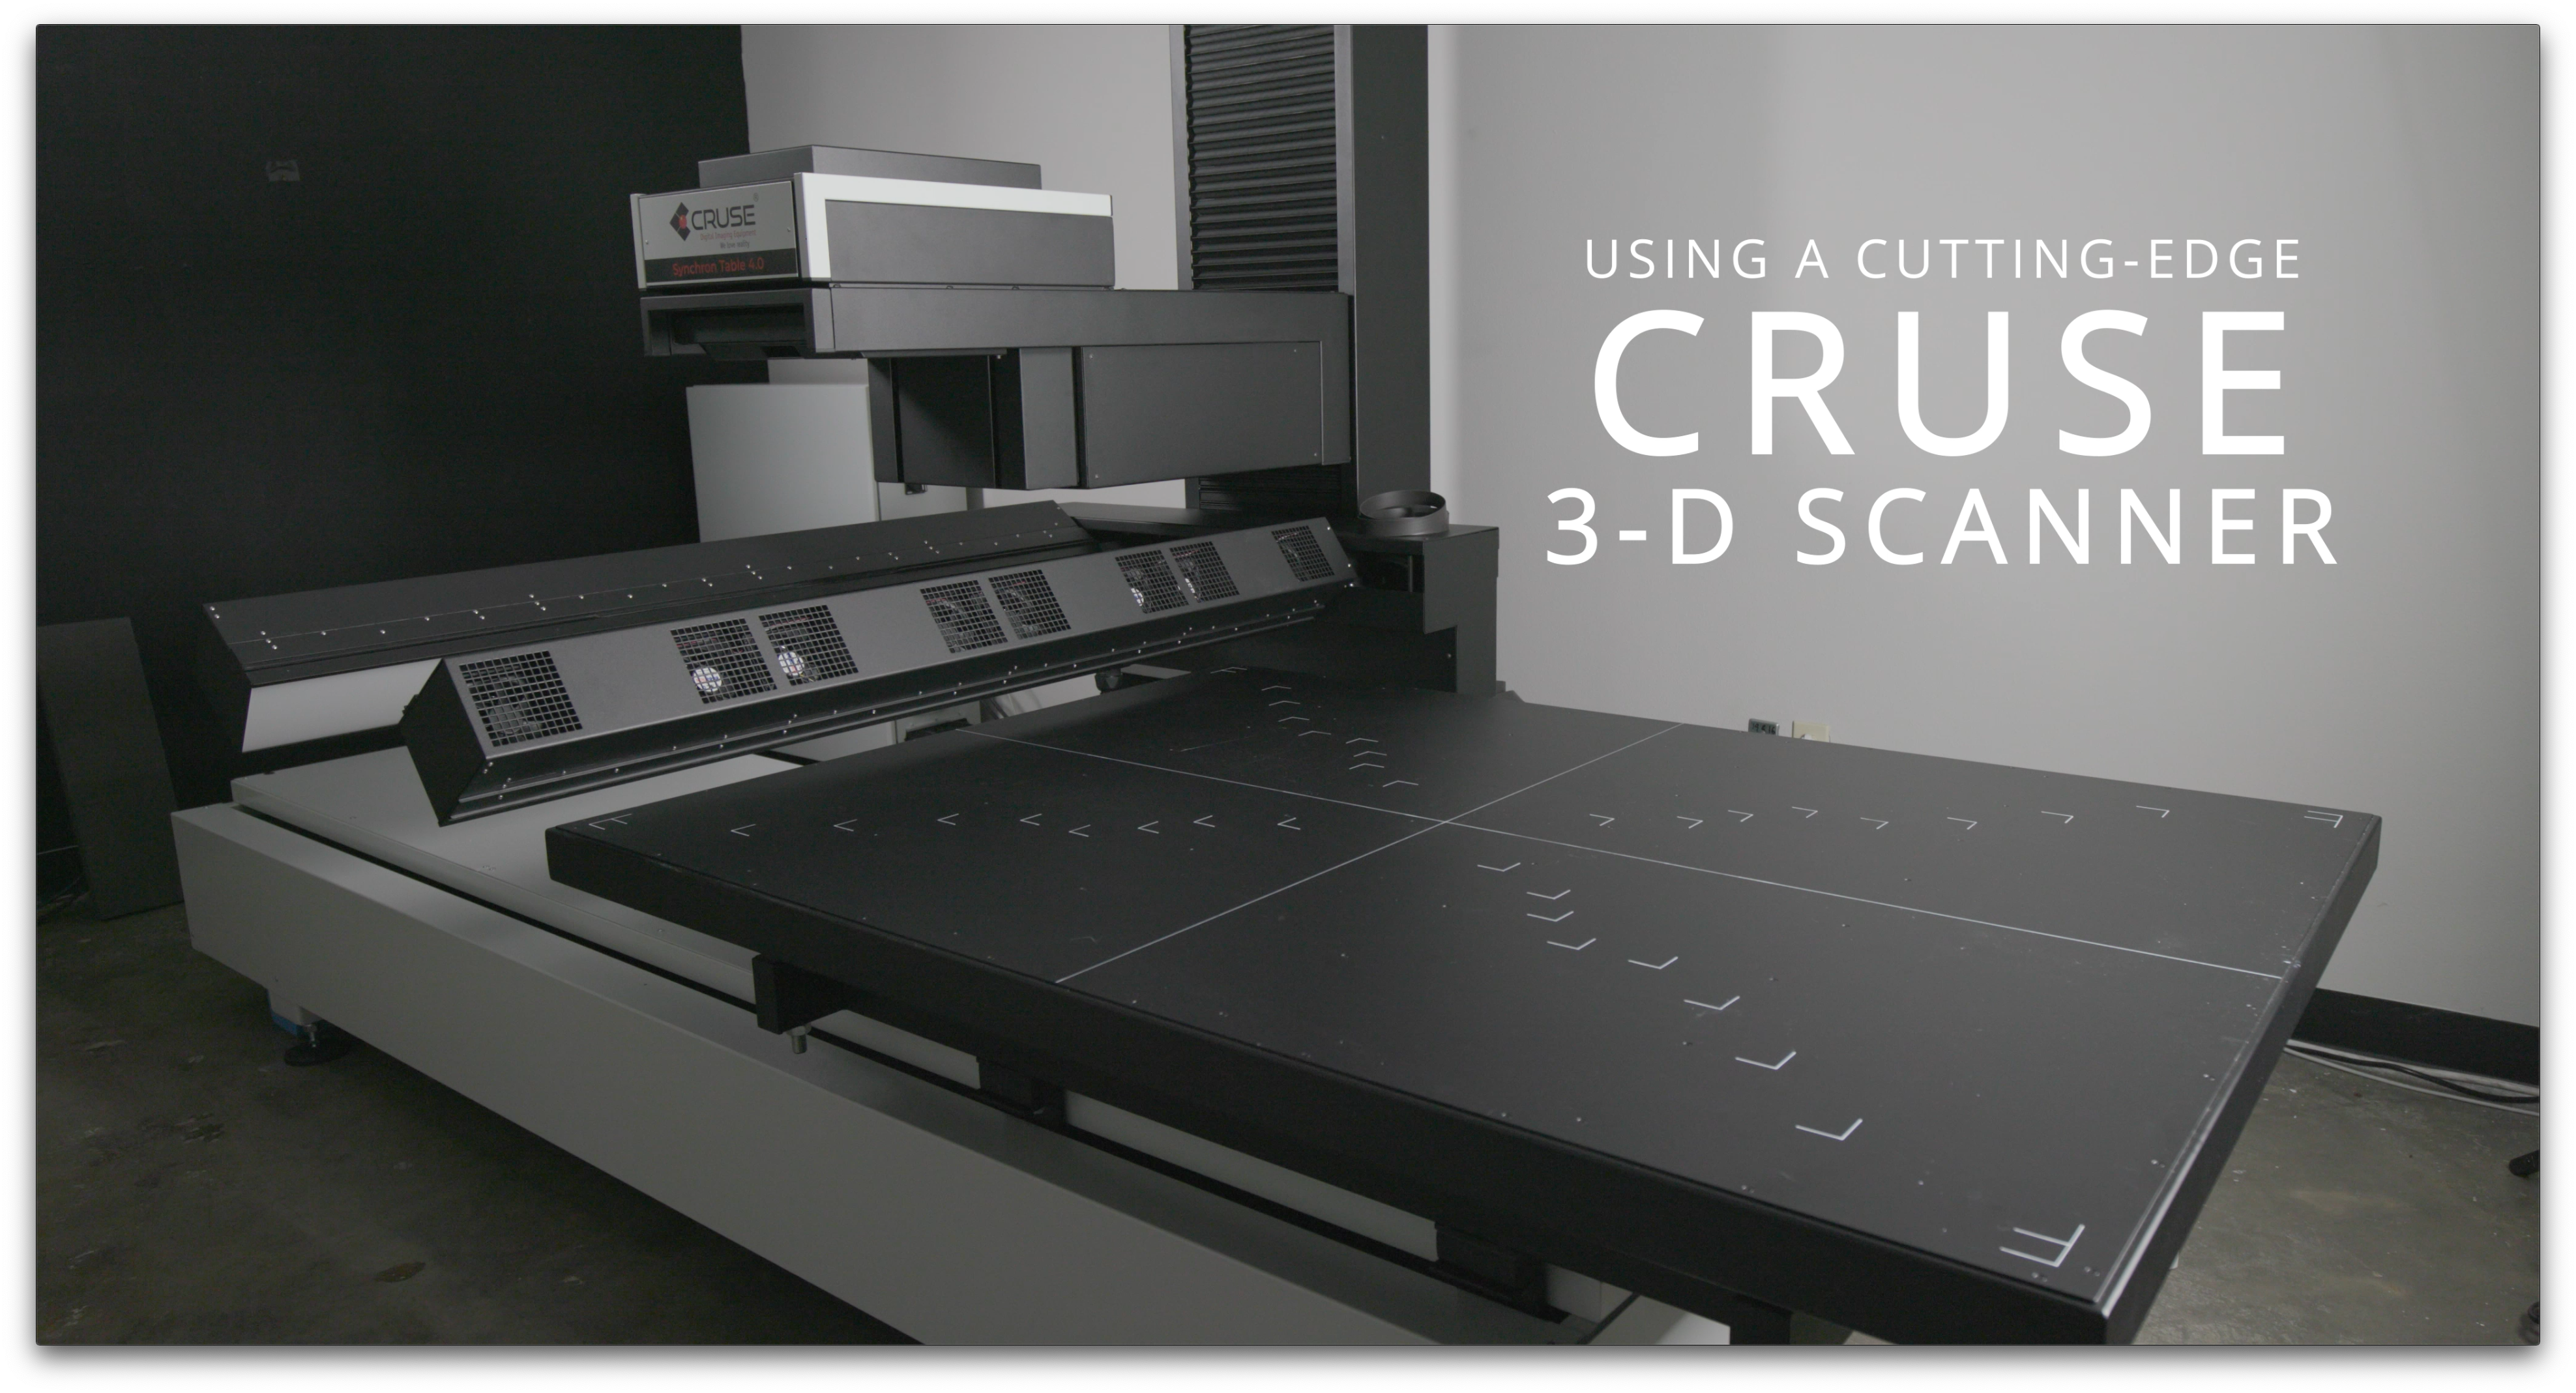 Using a cutting-edge Cruse 3-D scanner